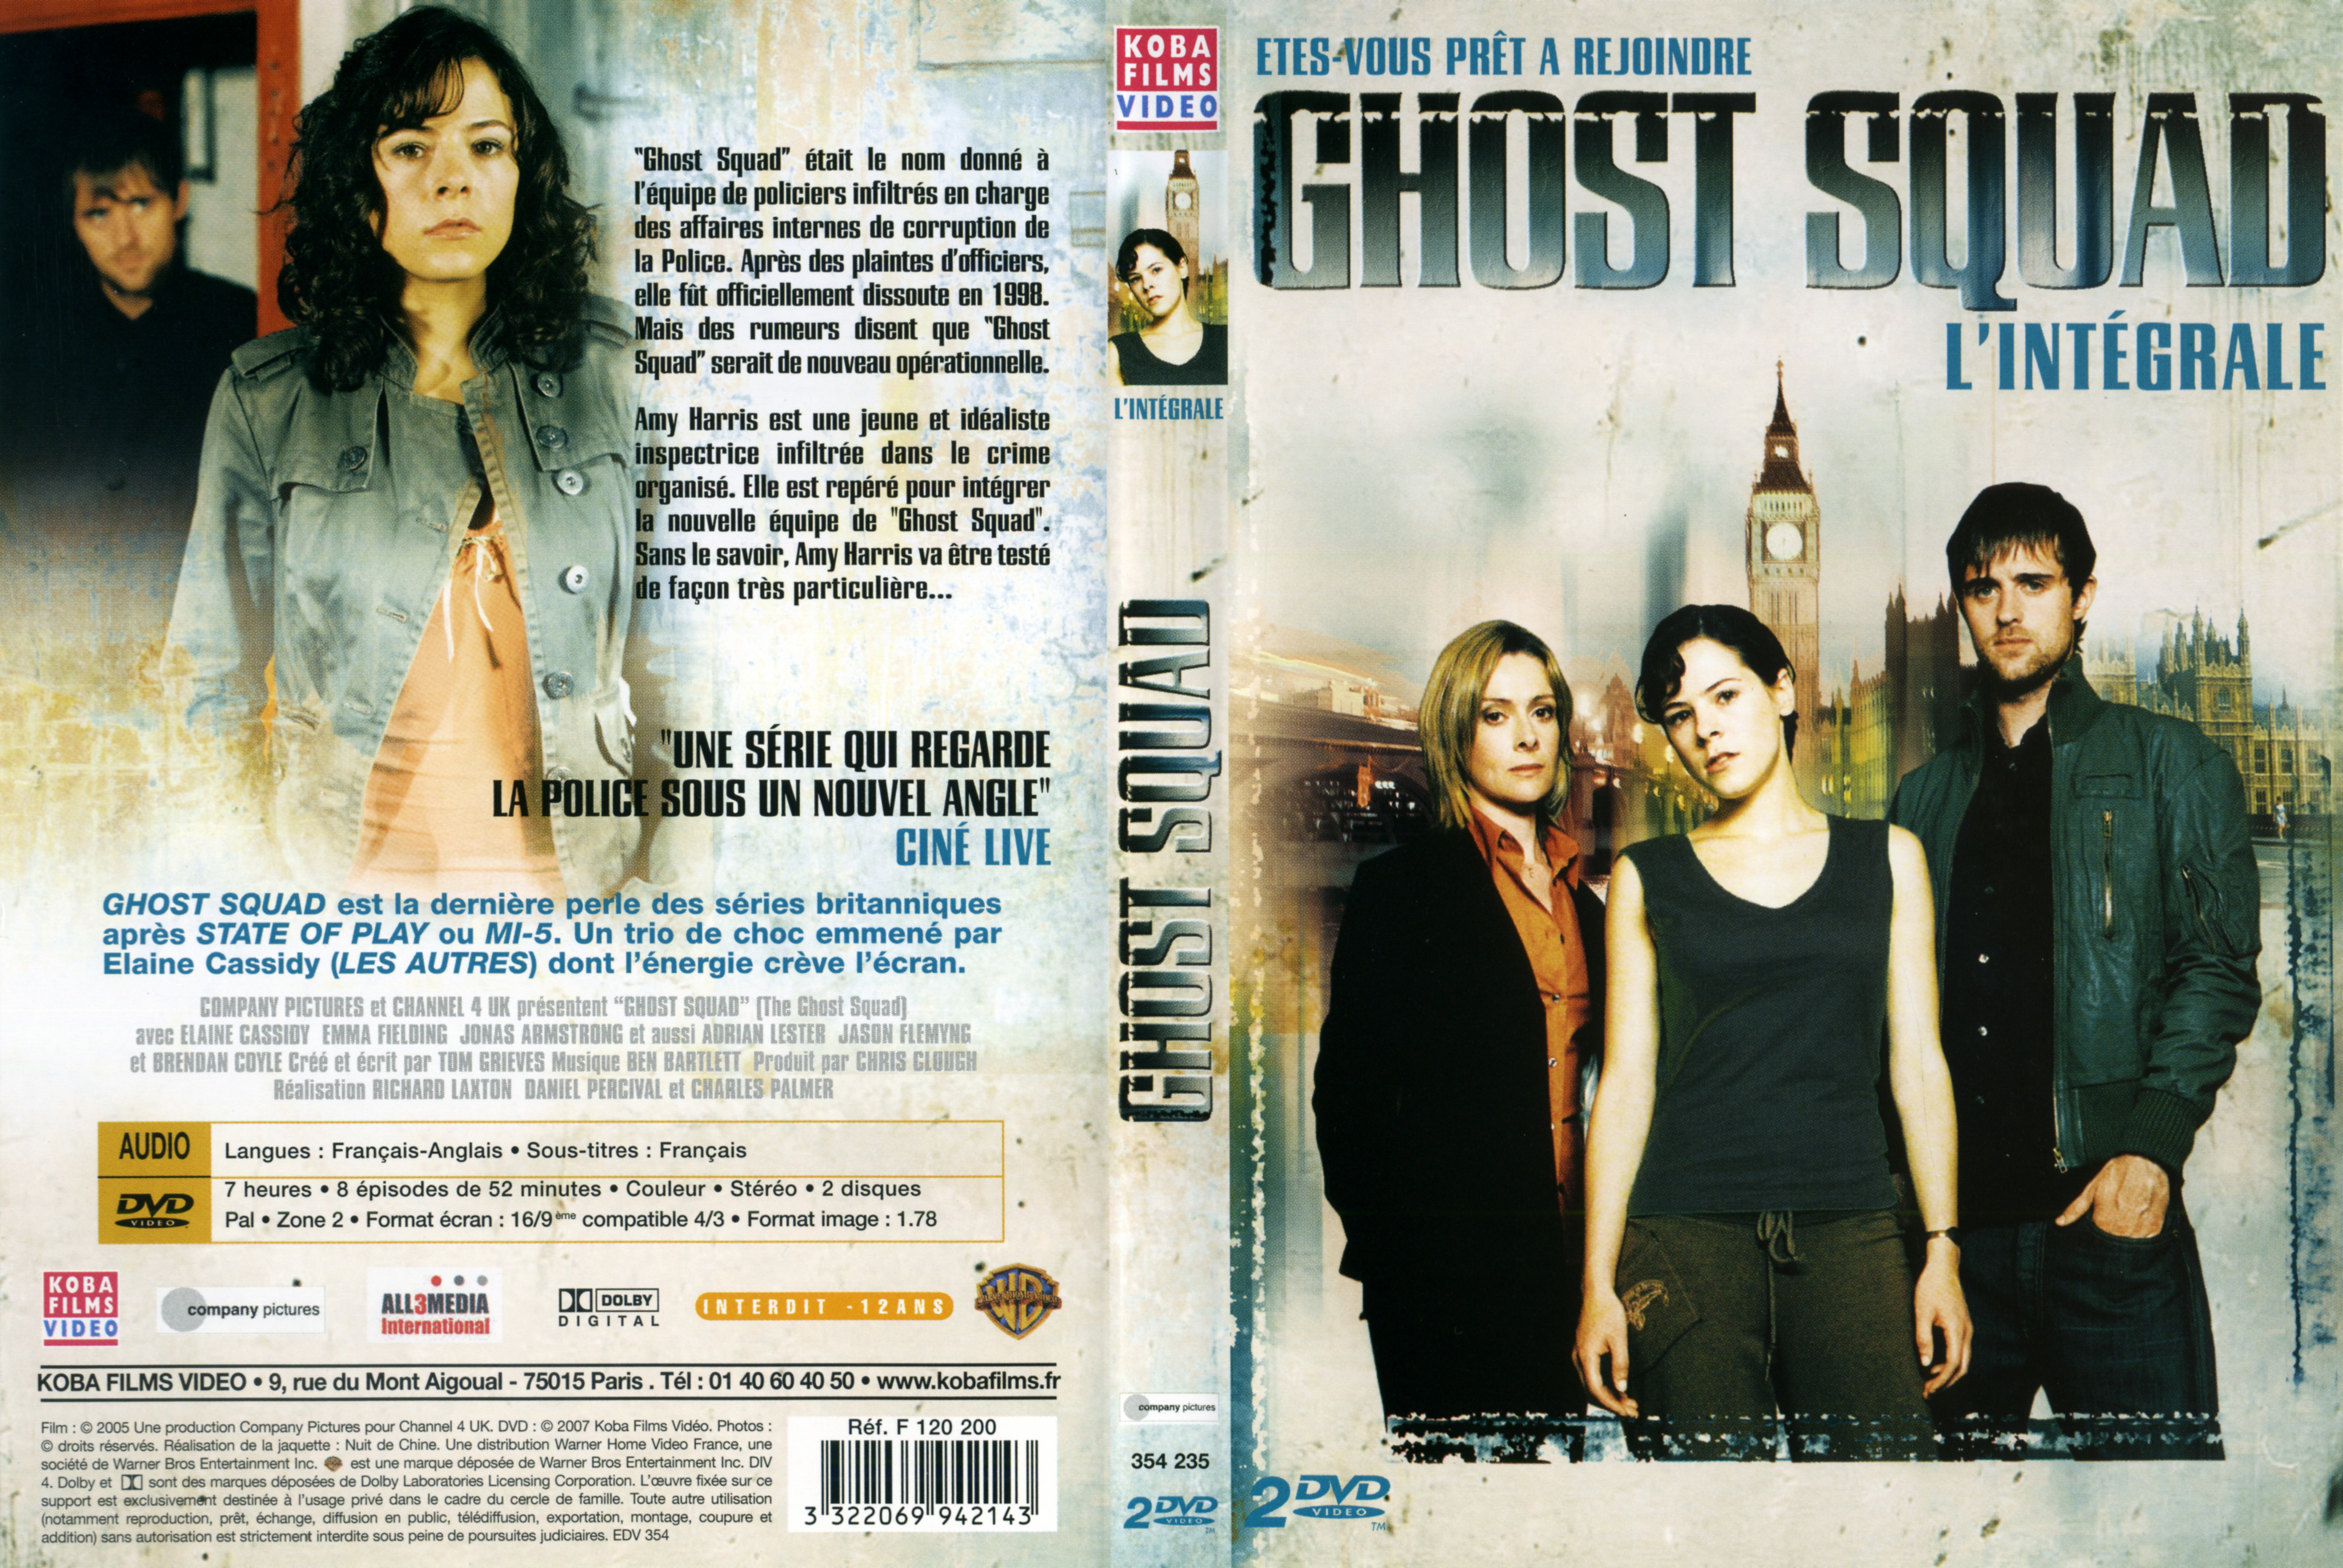 Jaquette DVD Ghost squad L